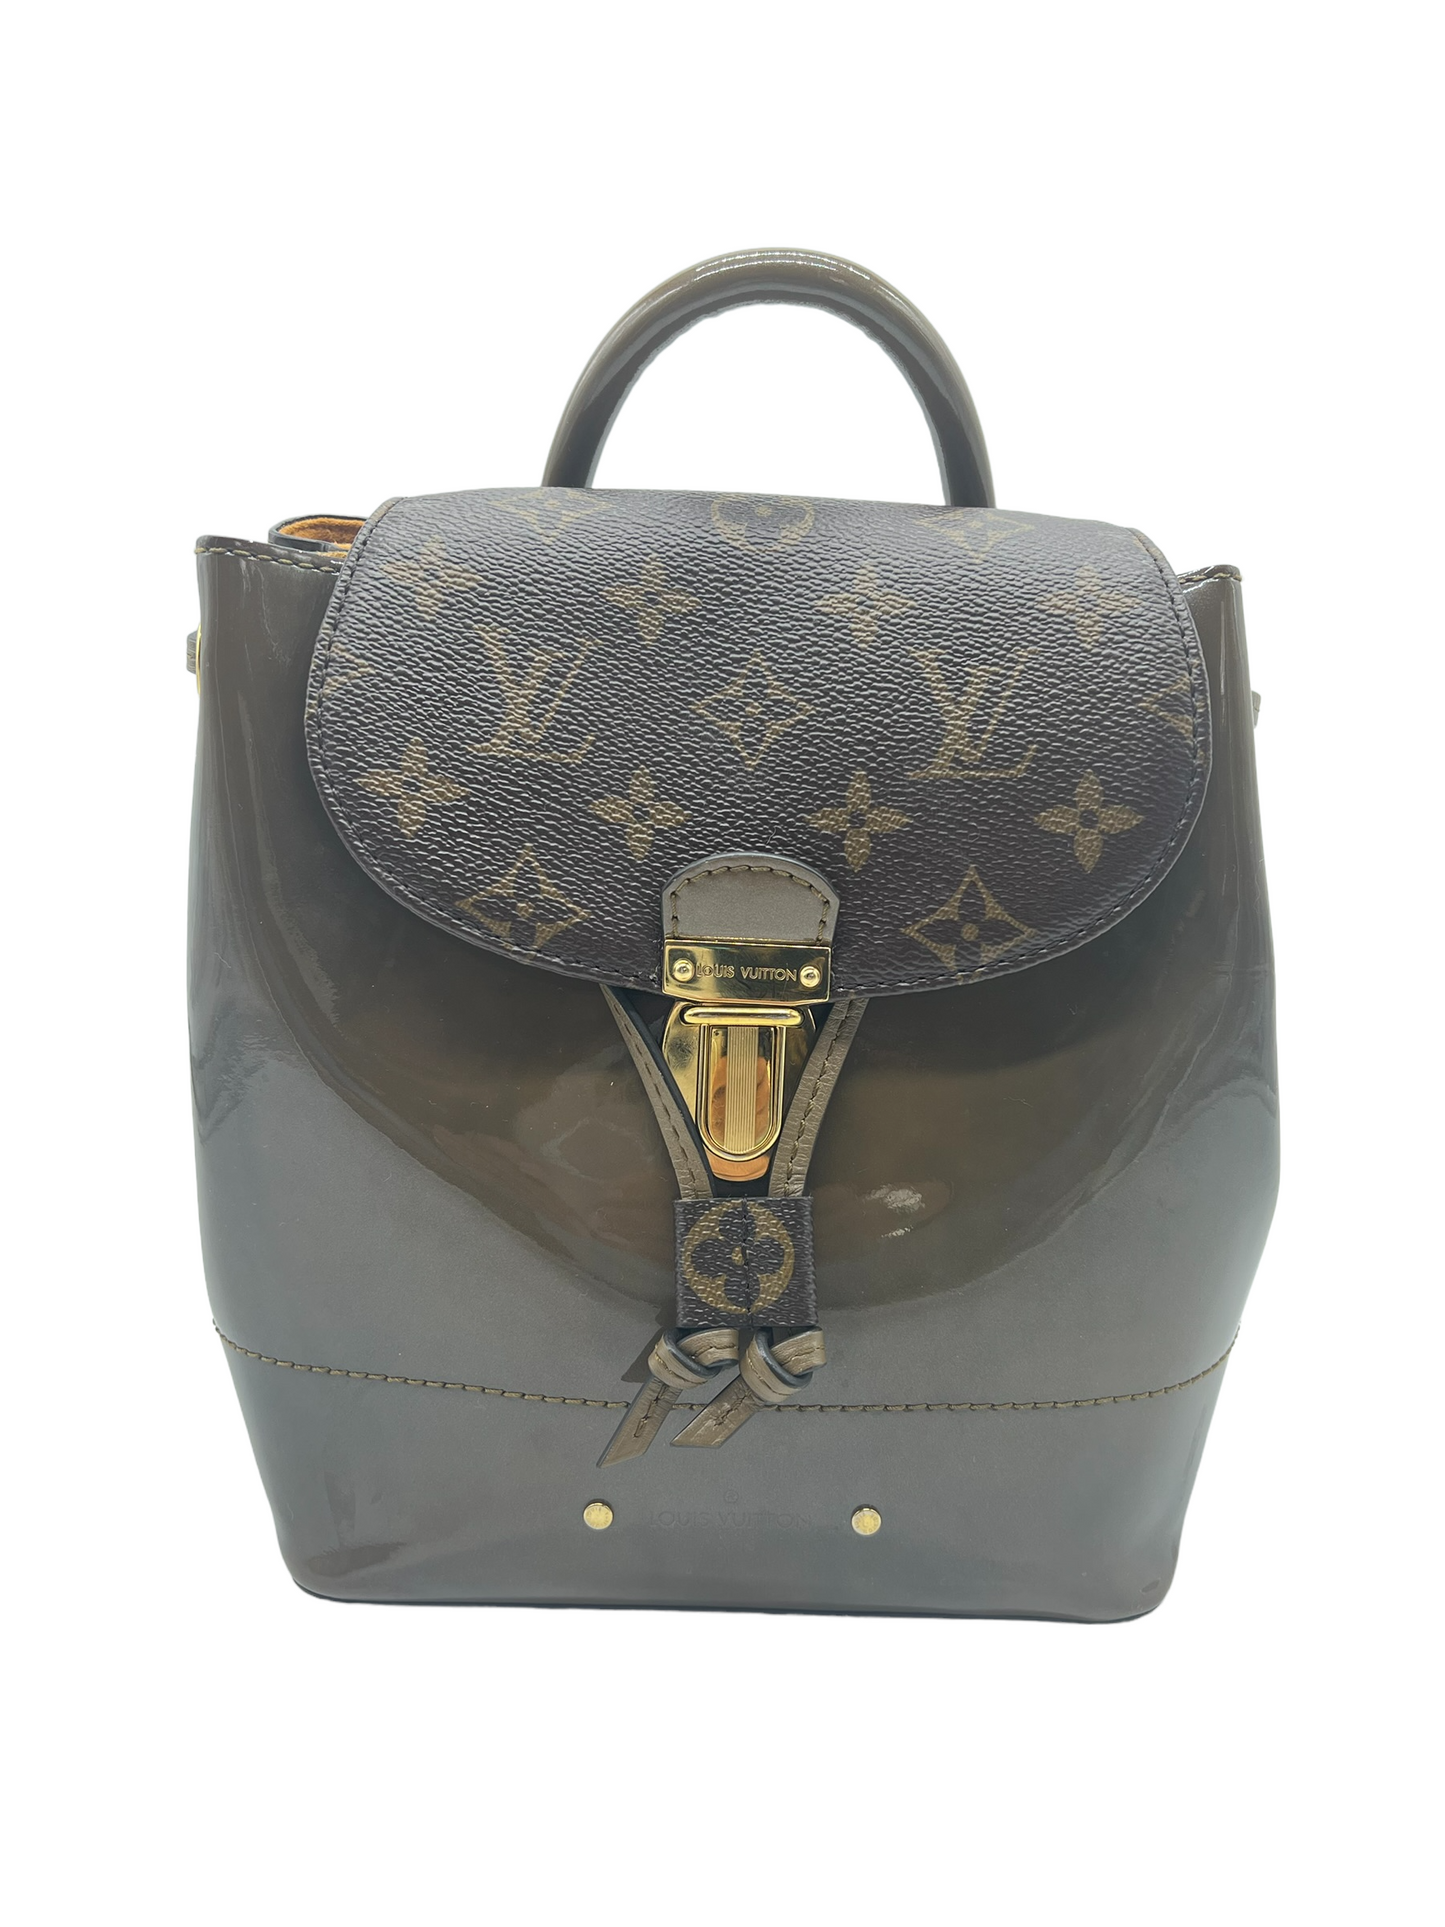 Louis Vuitton Vert Bronze Vernis Monogram Hot Springs Backpack Handbag